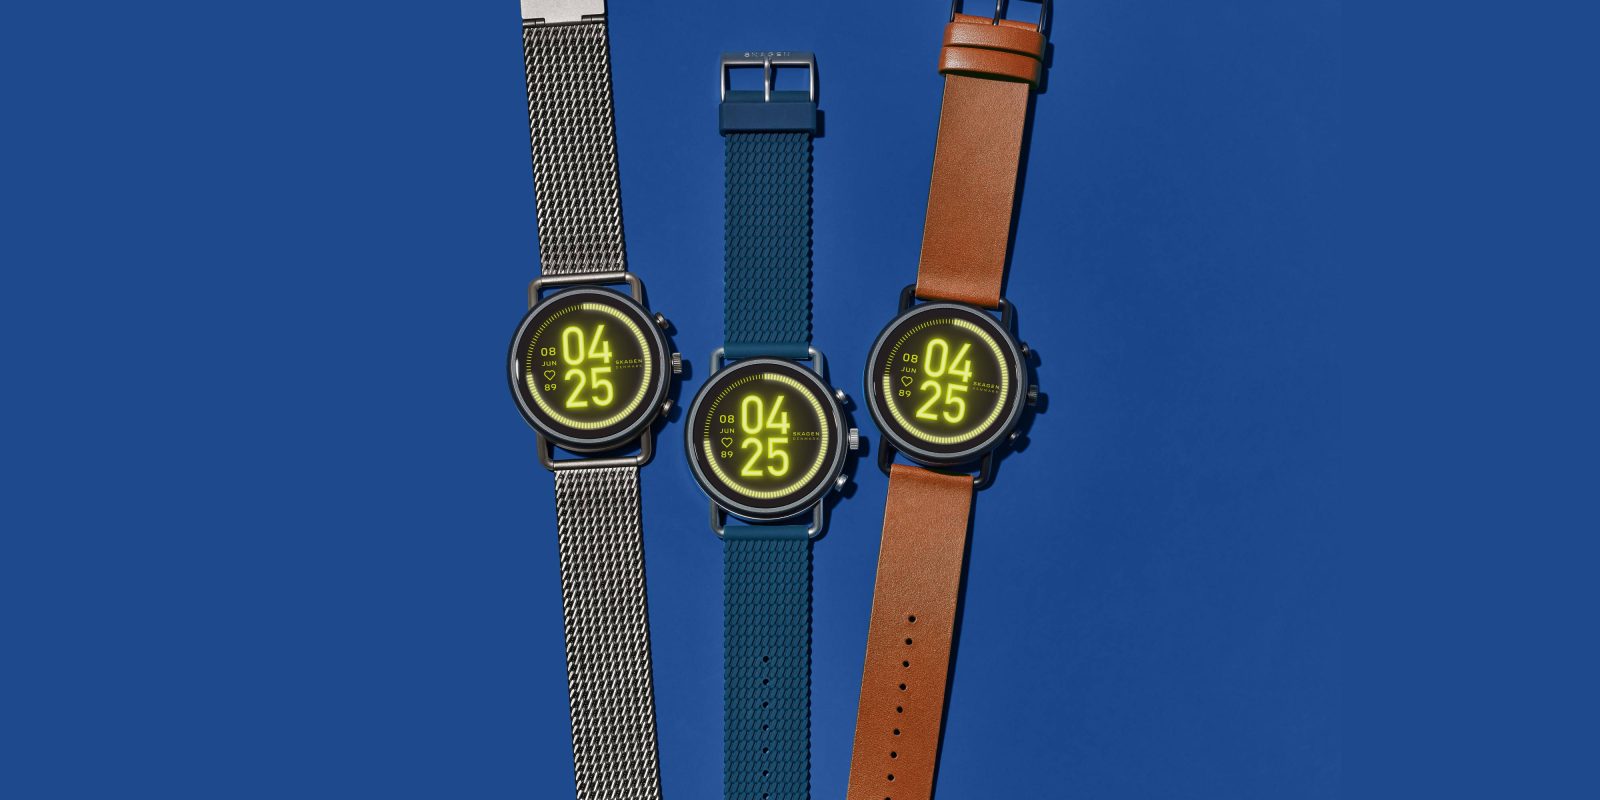 skagen falster 3 wear os smartwatch android